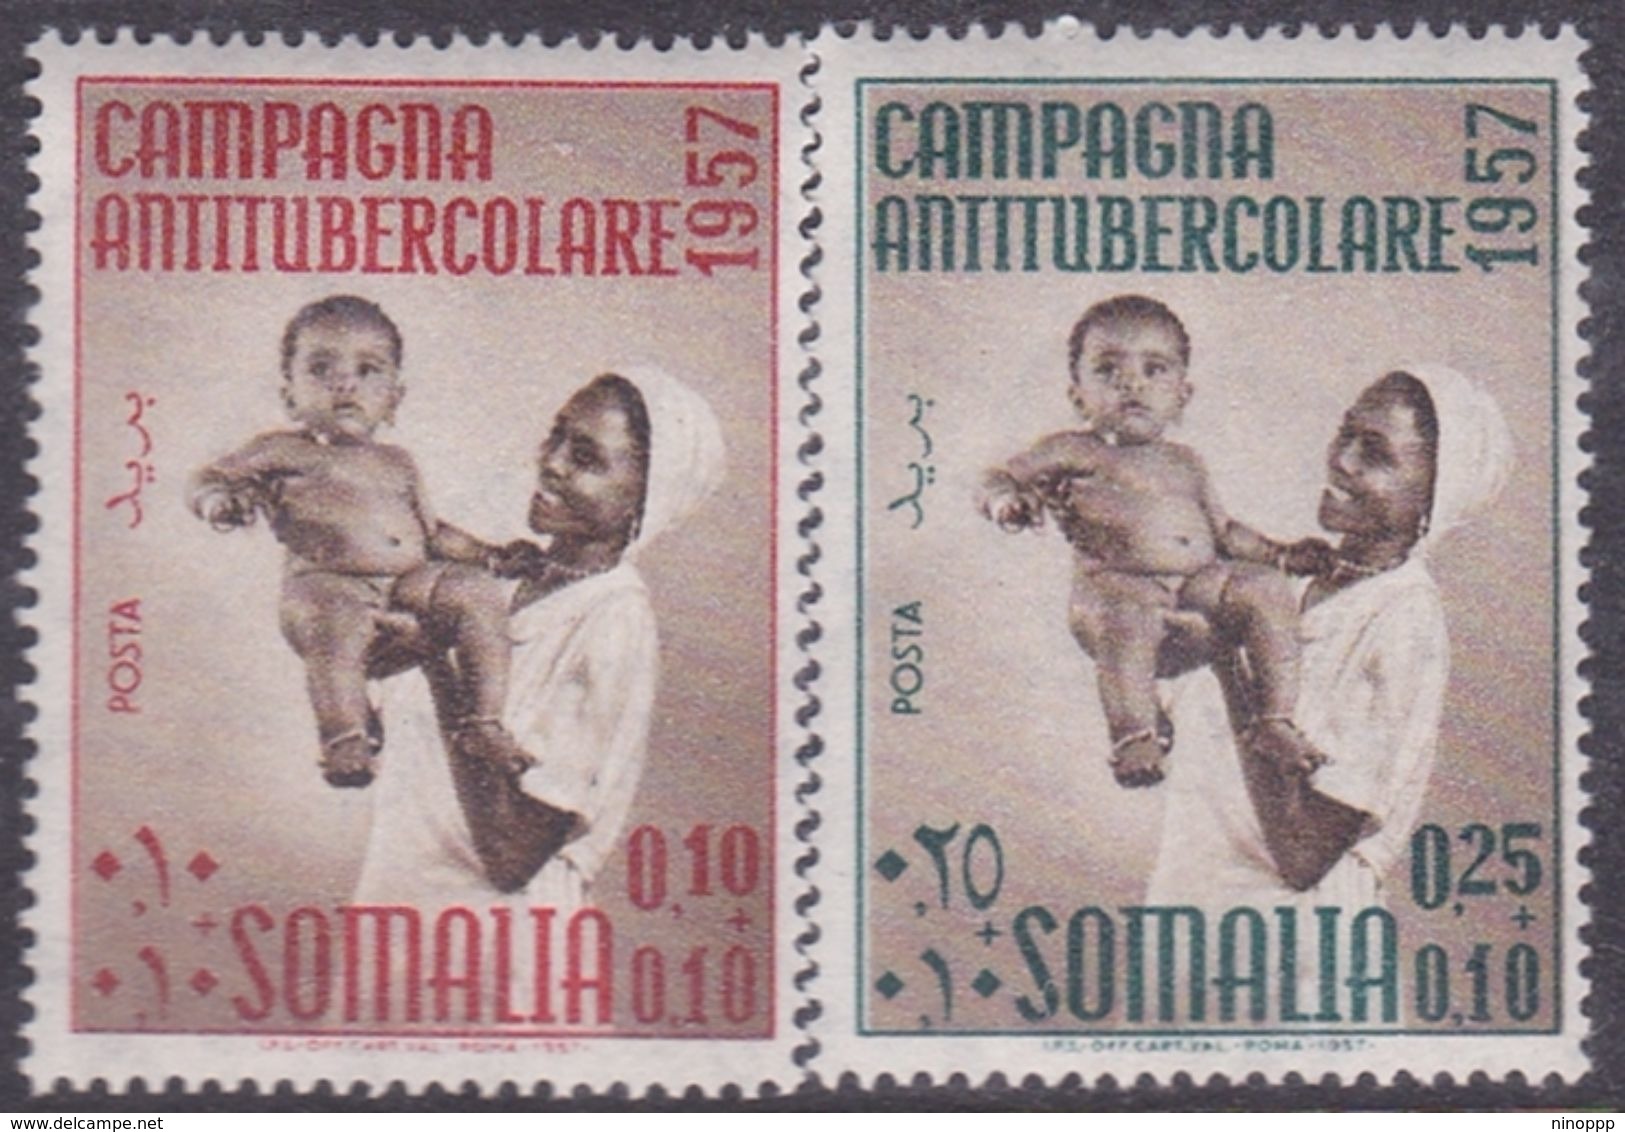 Somalia Scott B52-53 1957 2nd Campaign Against Tuberculosis, Mint Never Hinged - Somalia (AFIS)